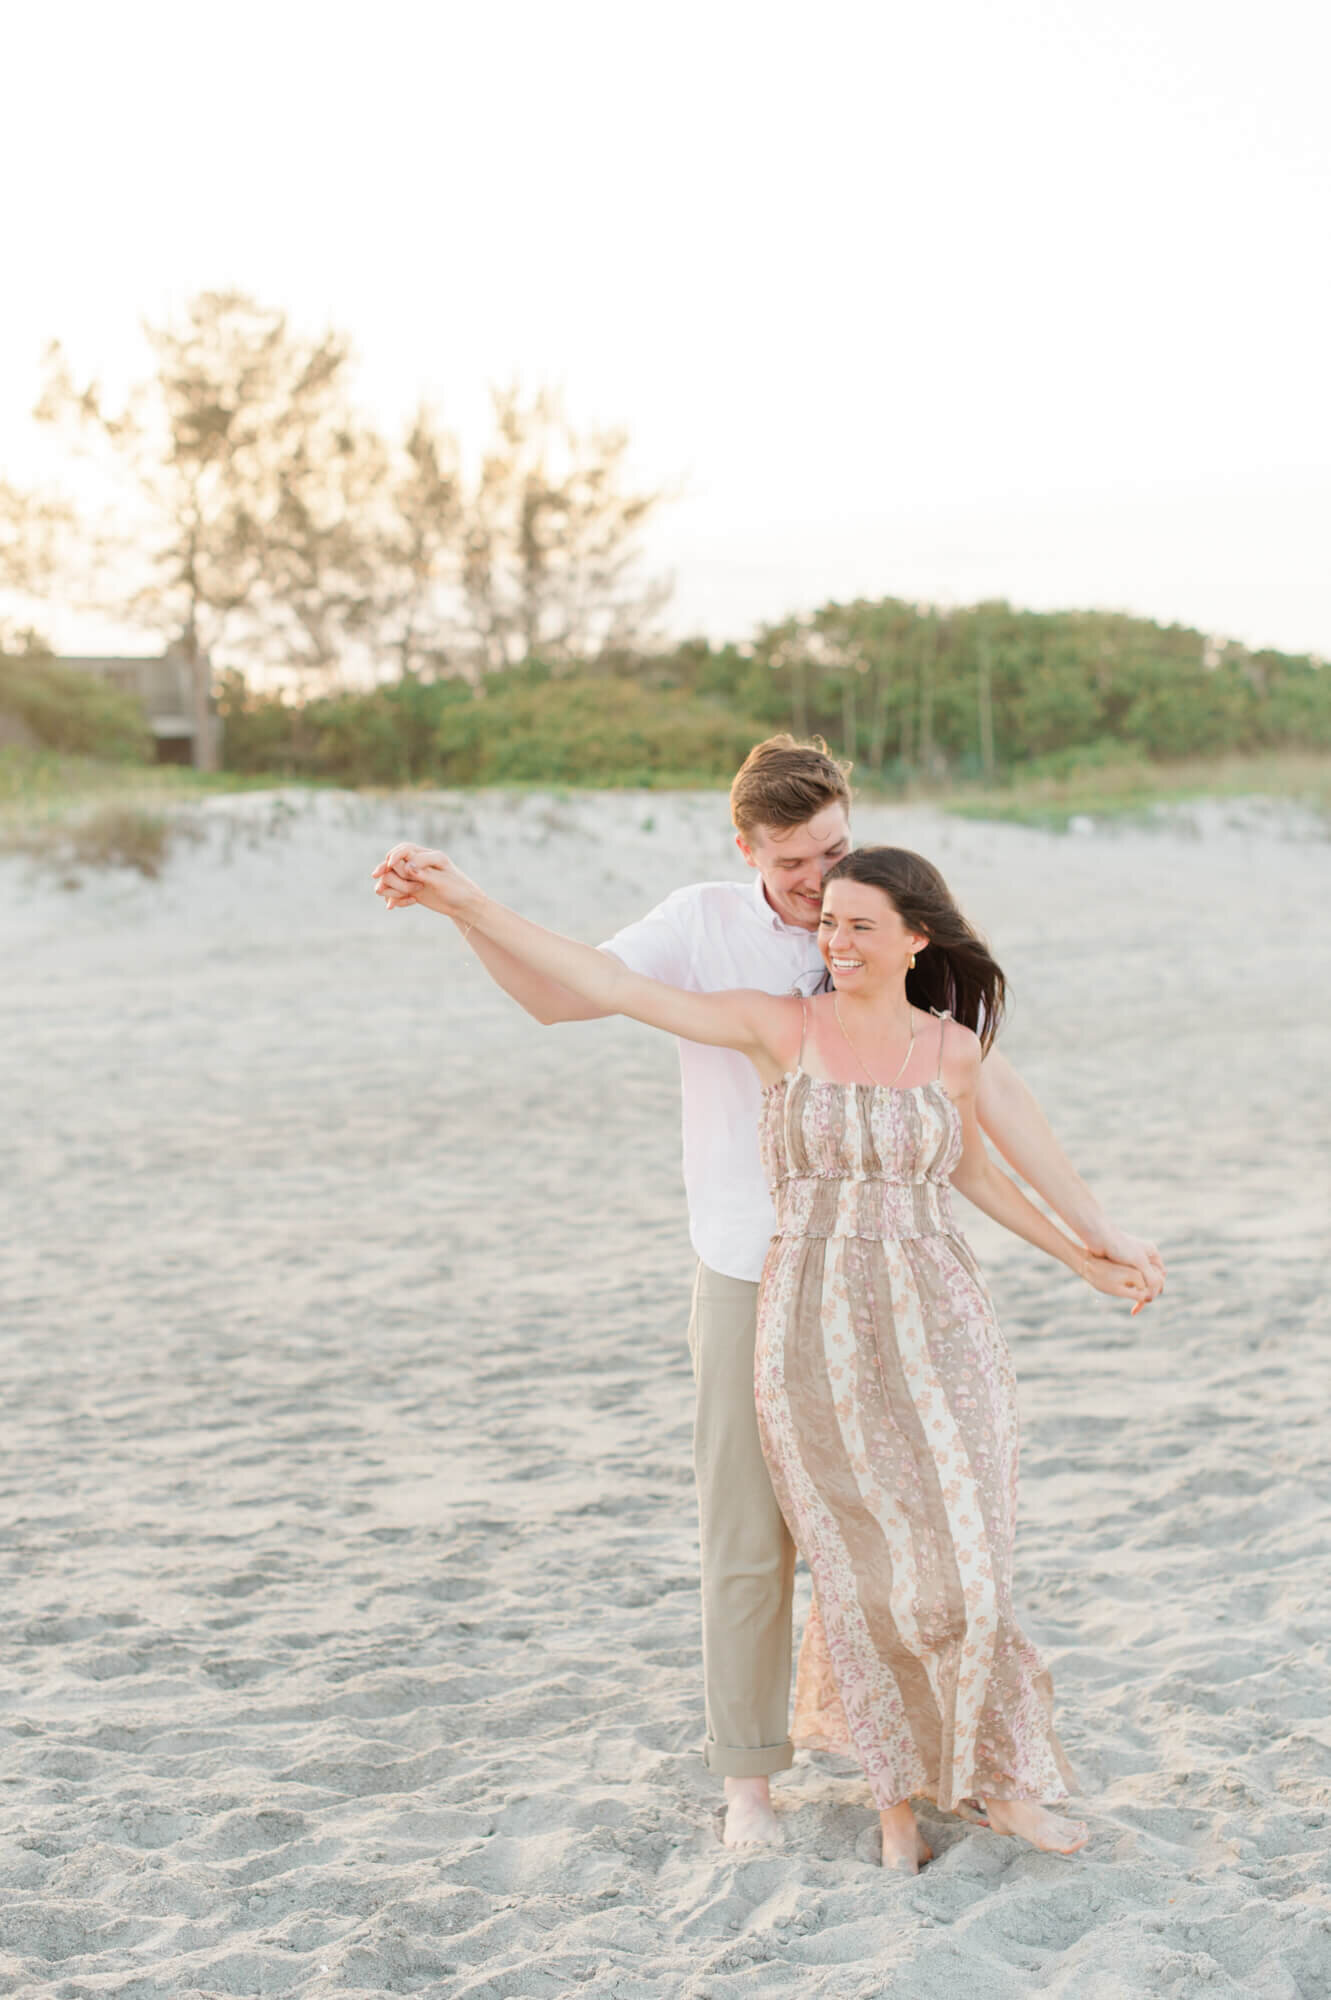 Orlando photographer captures beautiful couple dancing on the beach at sunset